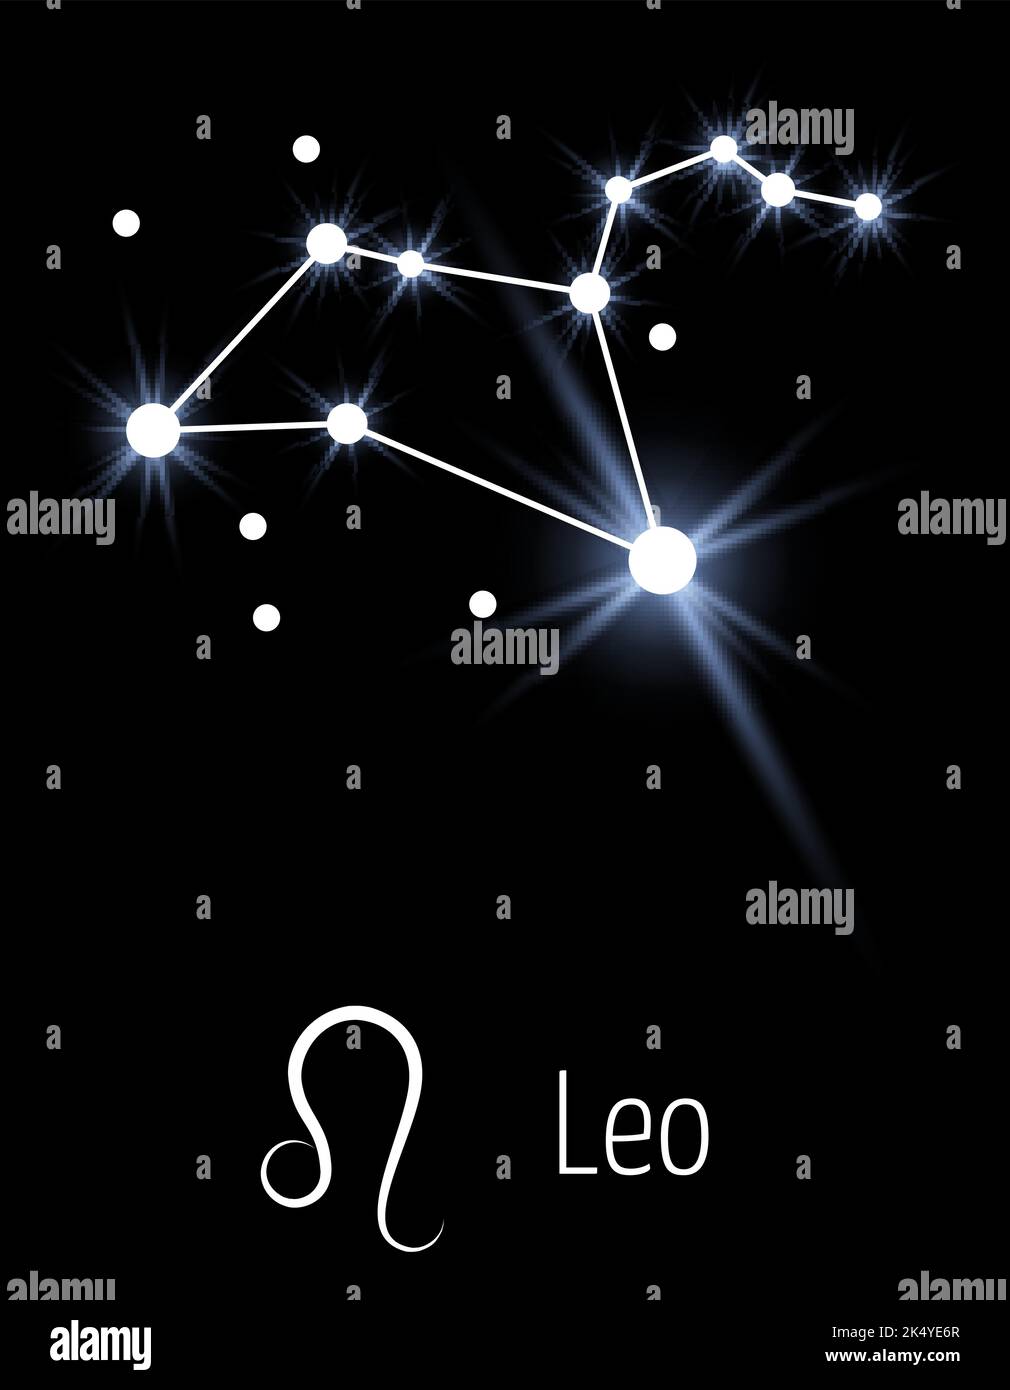 Leo zodiac sign. Stars in night space card template Stock Vector